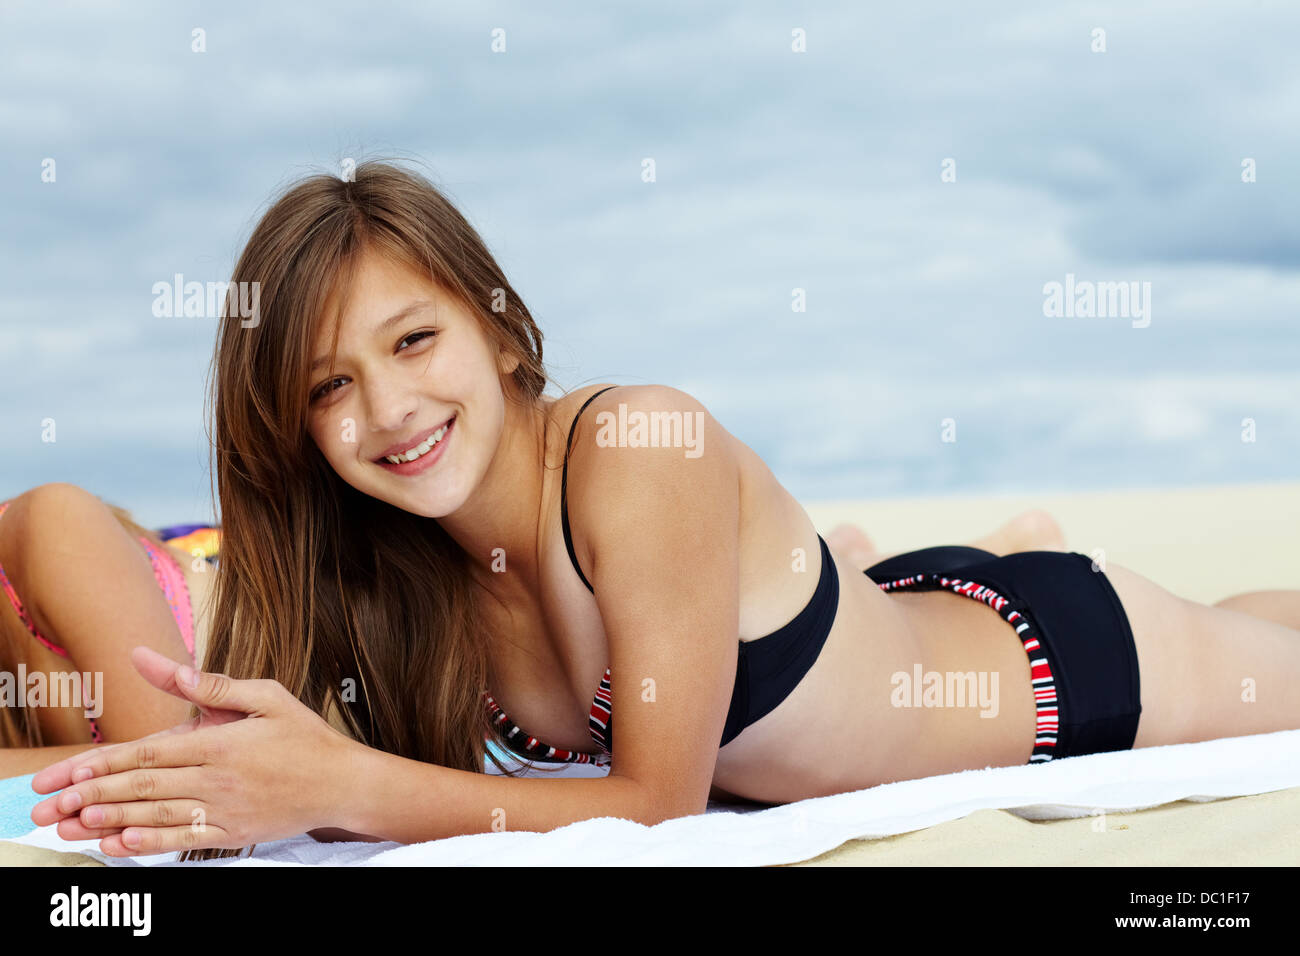 Portrait of teenage girl in bikini sunbathing and looking at camera Stock  Photo - Alamy